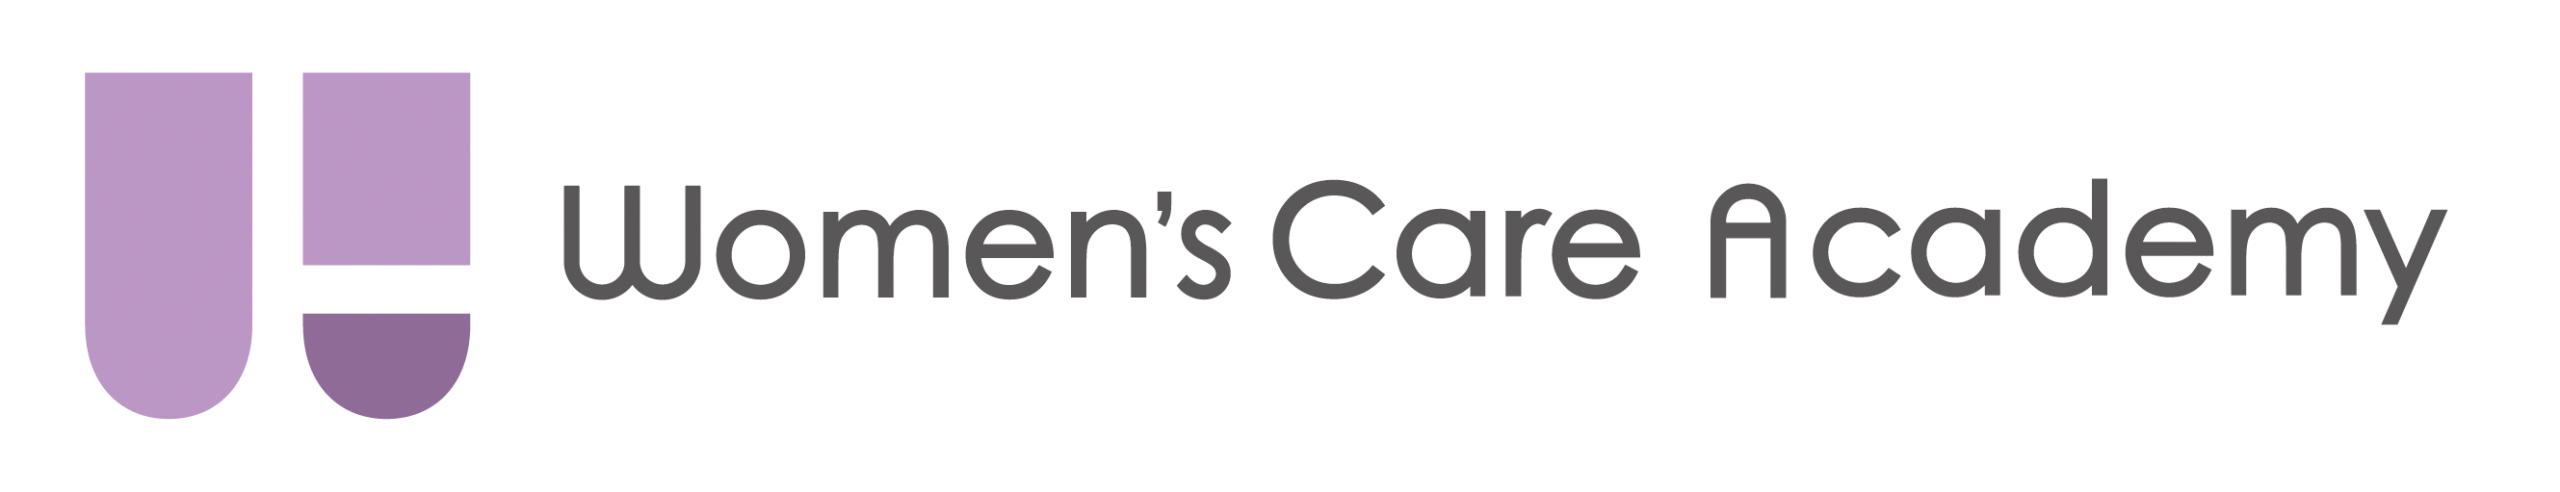 Women's Care Academy